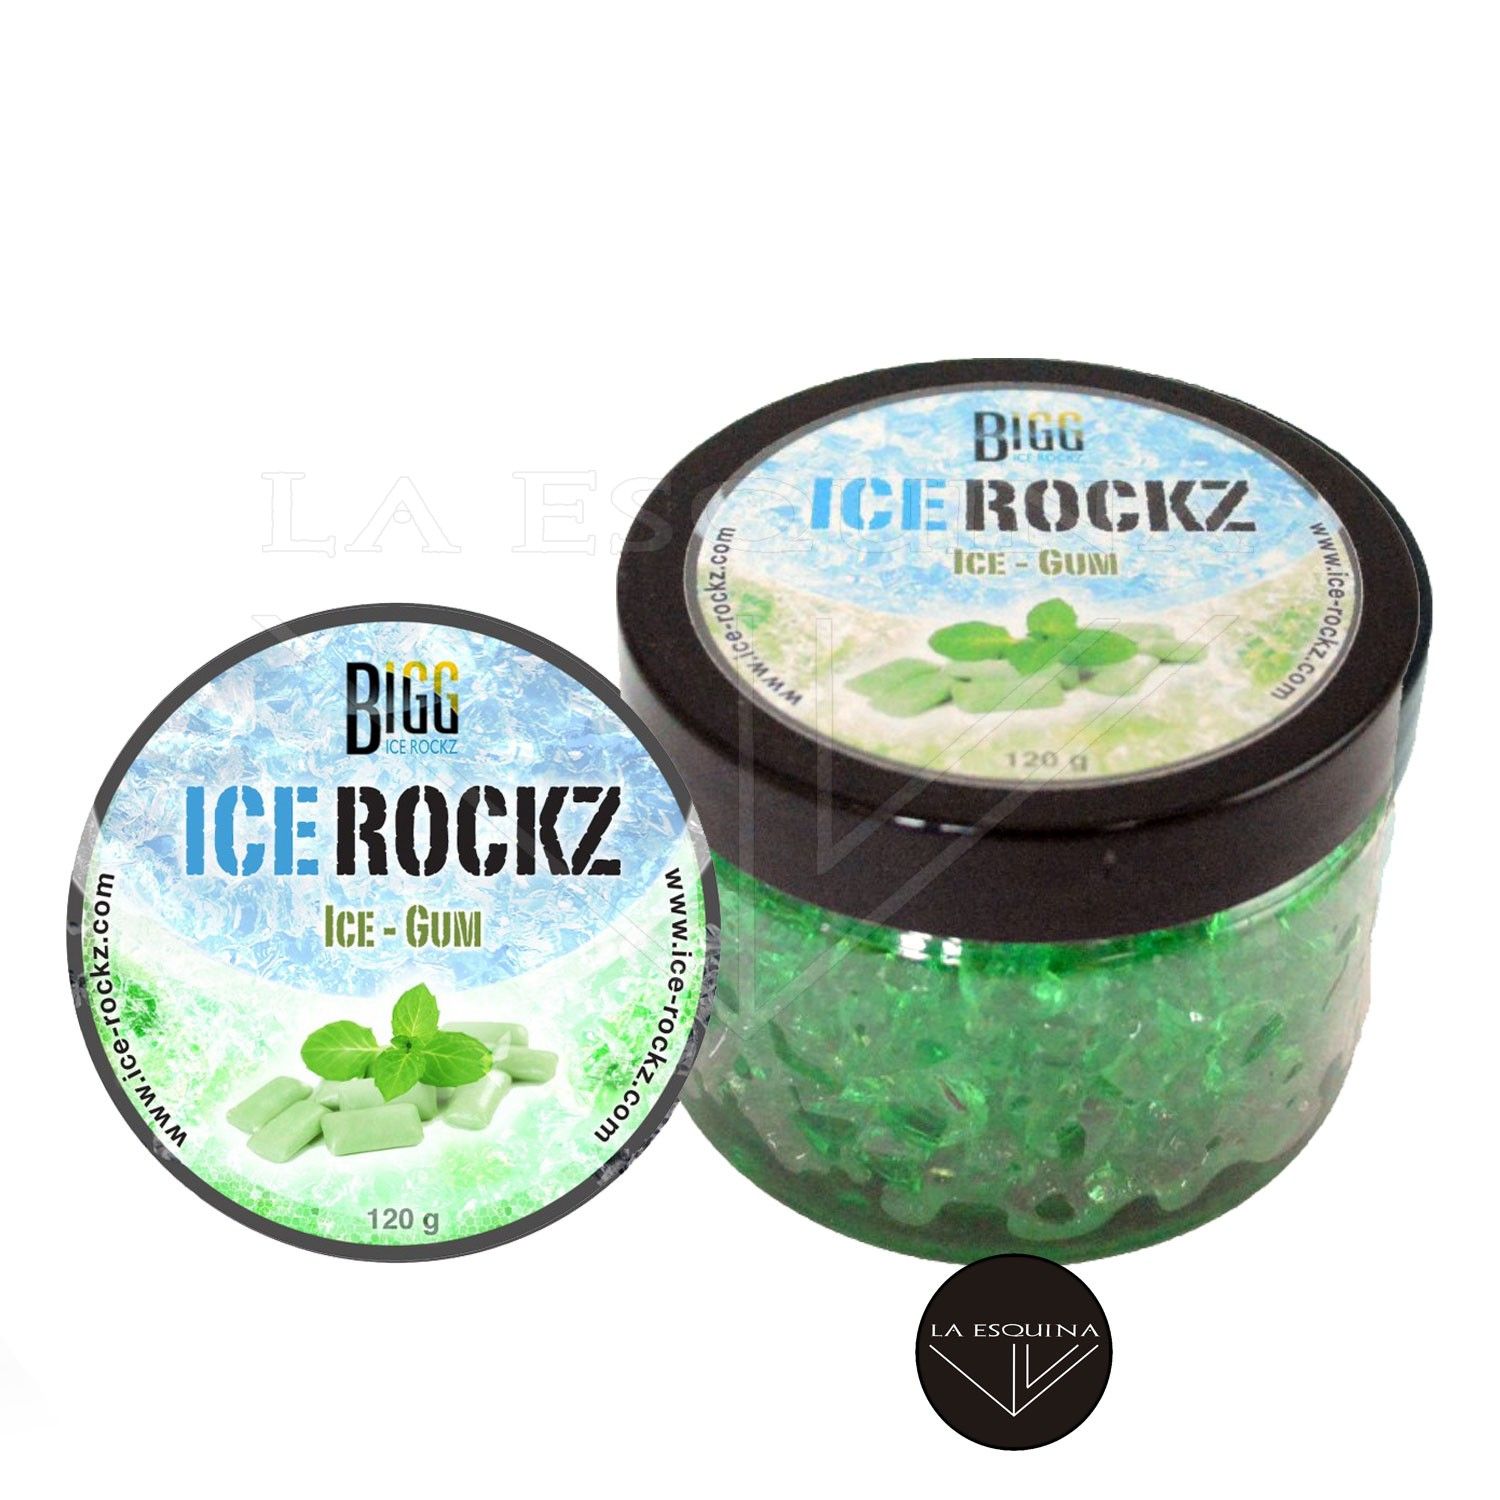 Gel Rock de Cachimba BIGG ICE ROCKZ – 120 g. – Ice-Gum